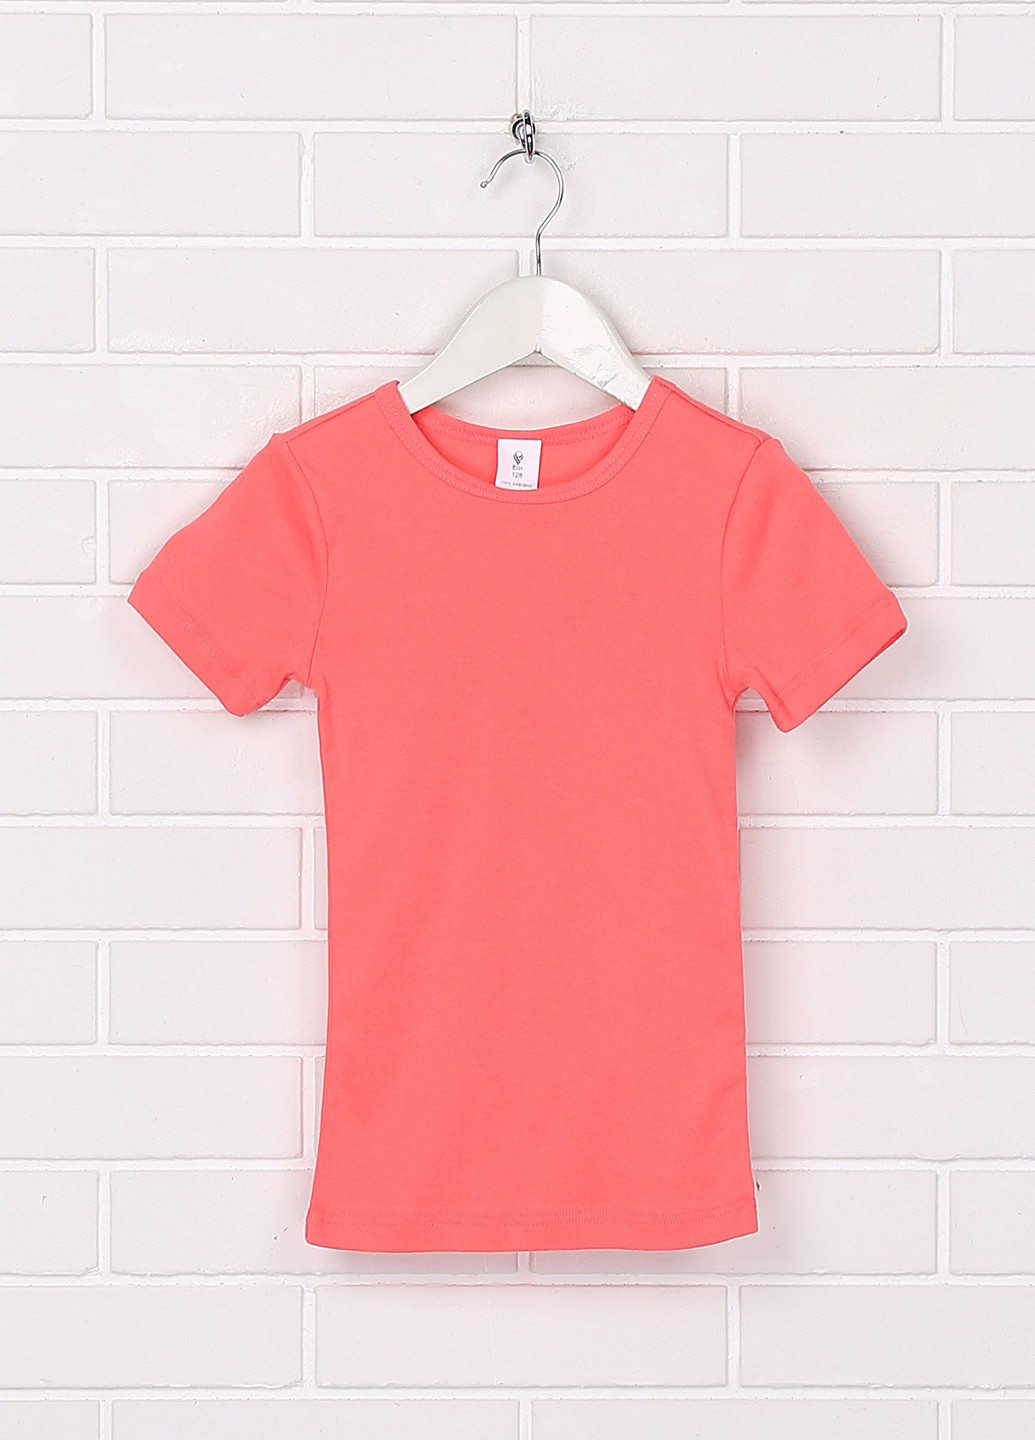 Коралловая летняя футболка Роза